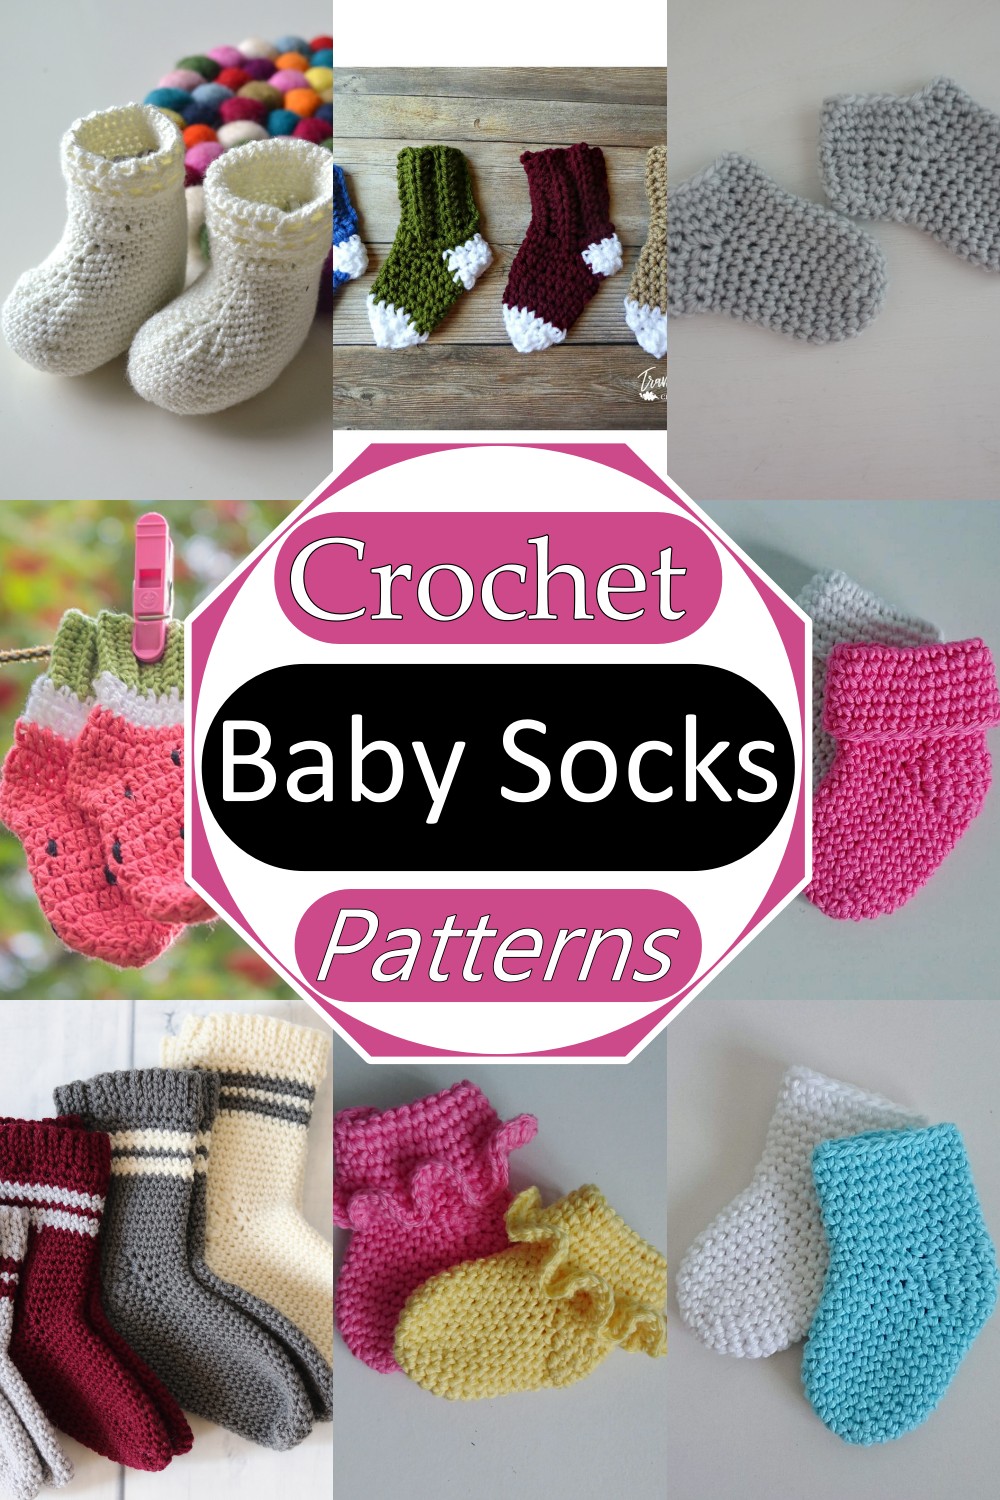 Crochet Baby Socks Patterns